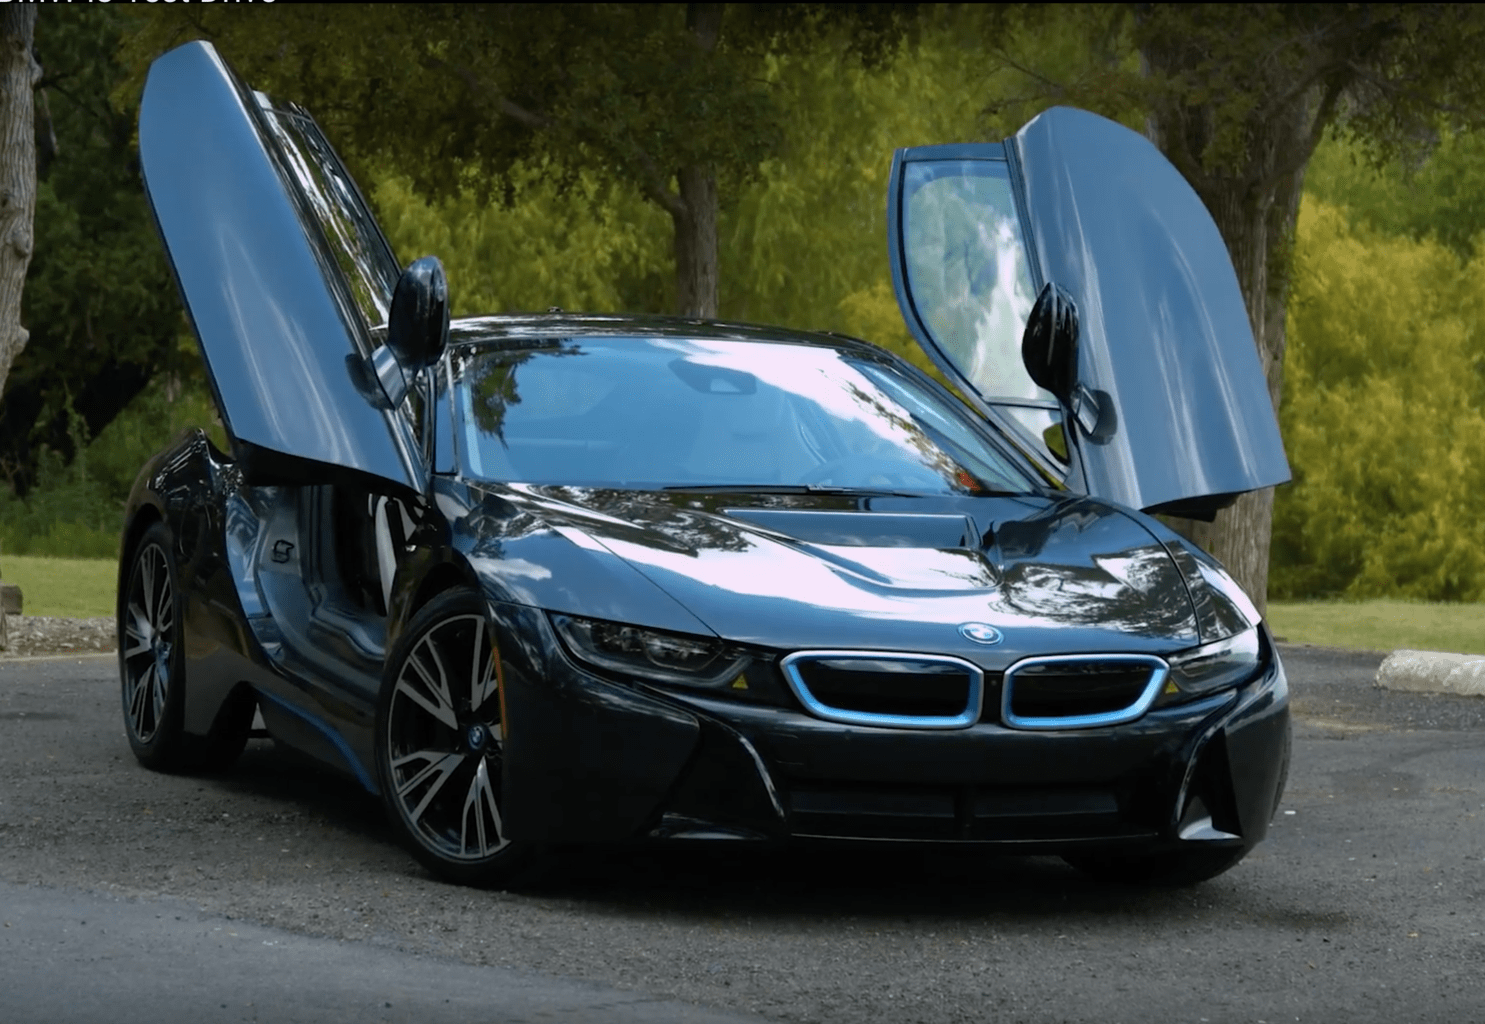 2017 BMW i8 Test Drive Photo Gallery